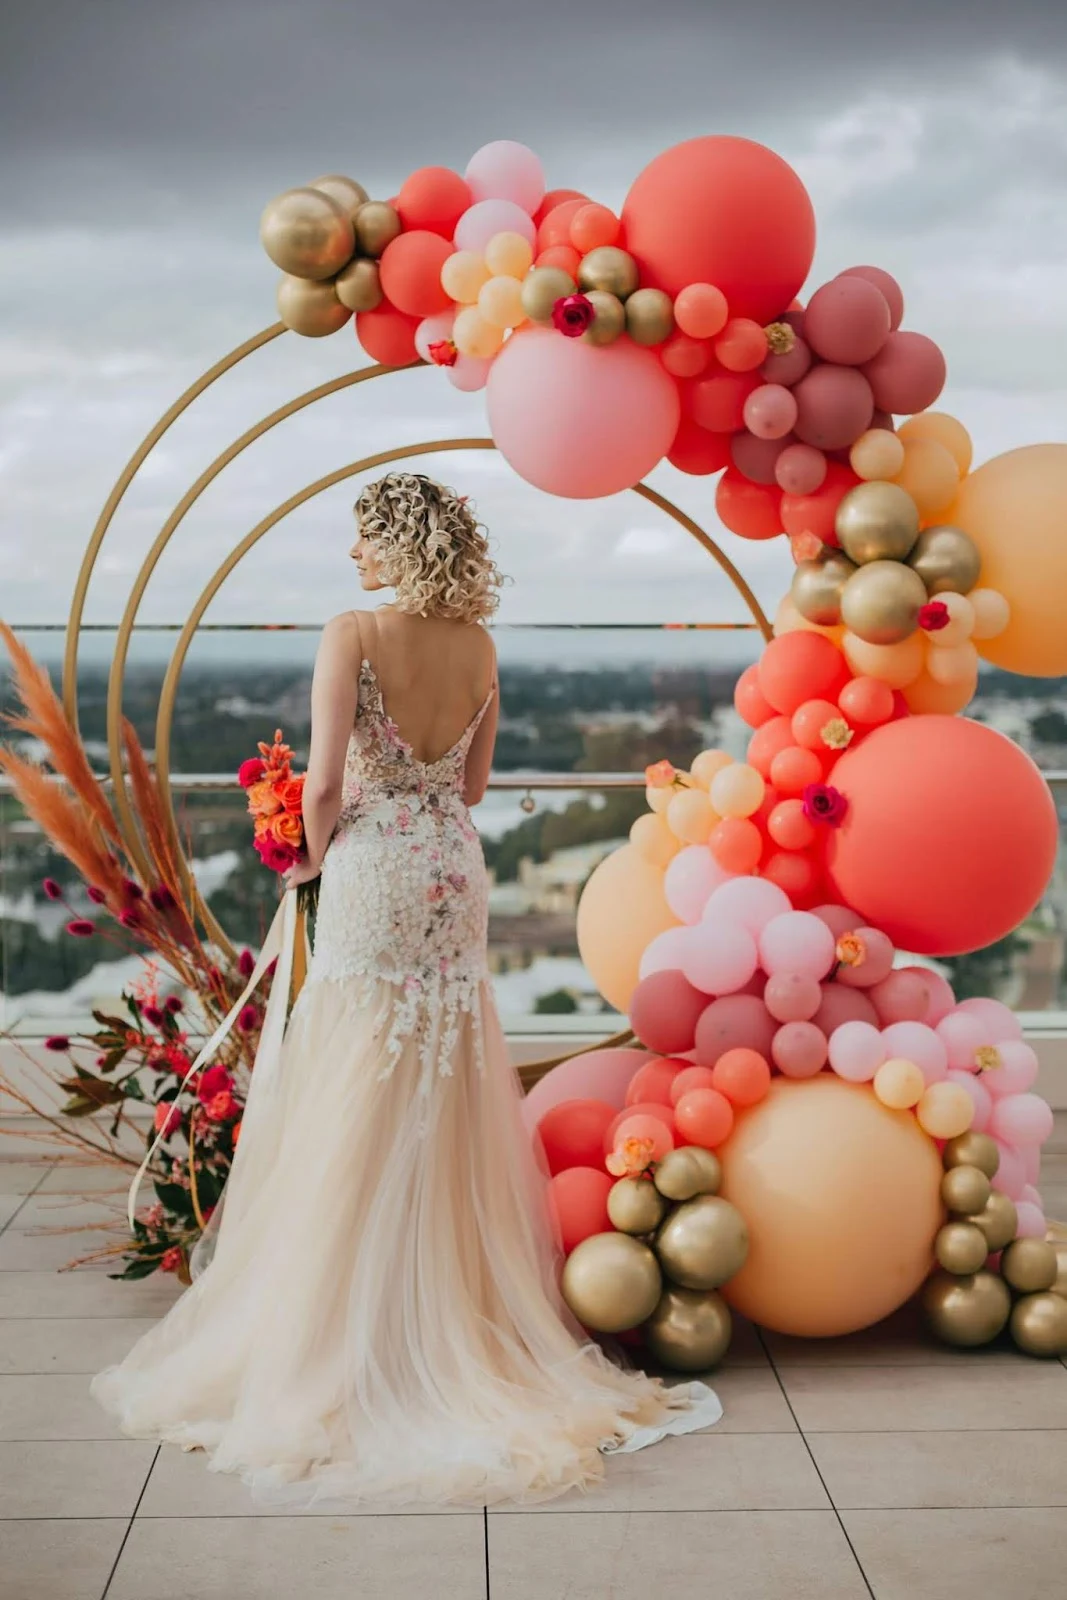 simone addison photography weddings love is love bride + bride wedding gowns floral design cake venue